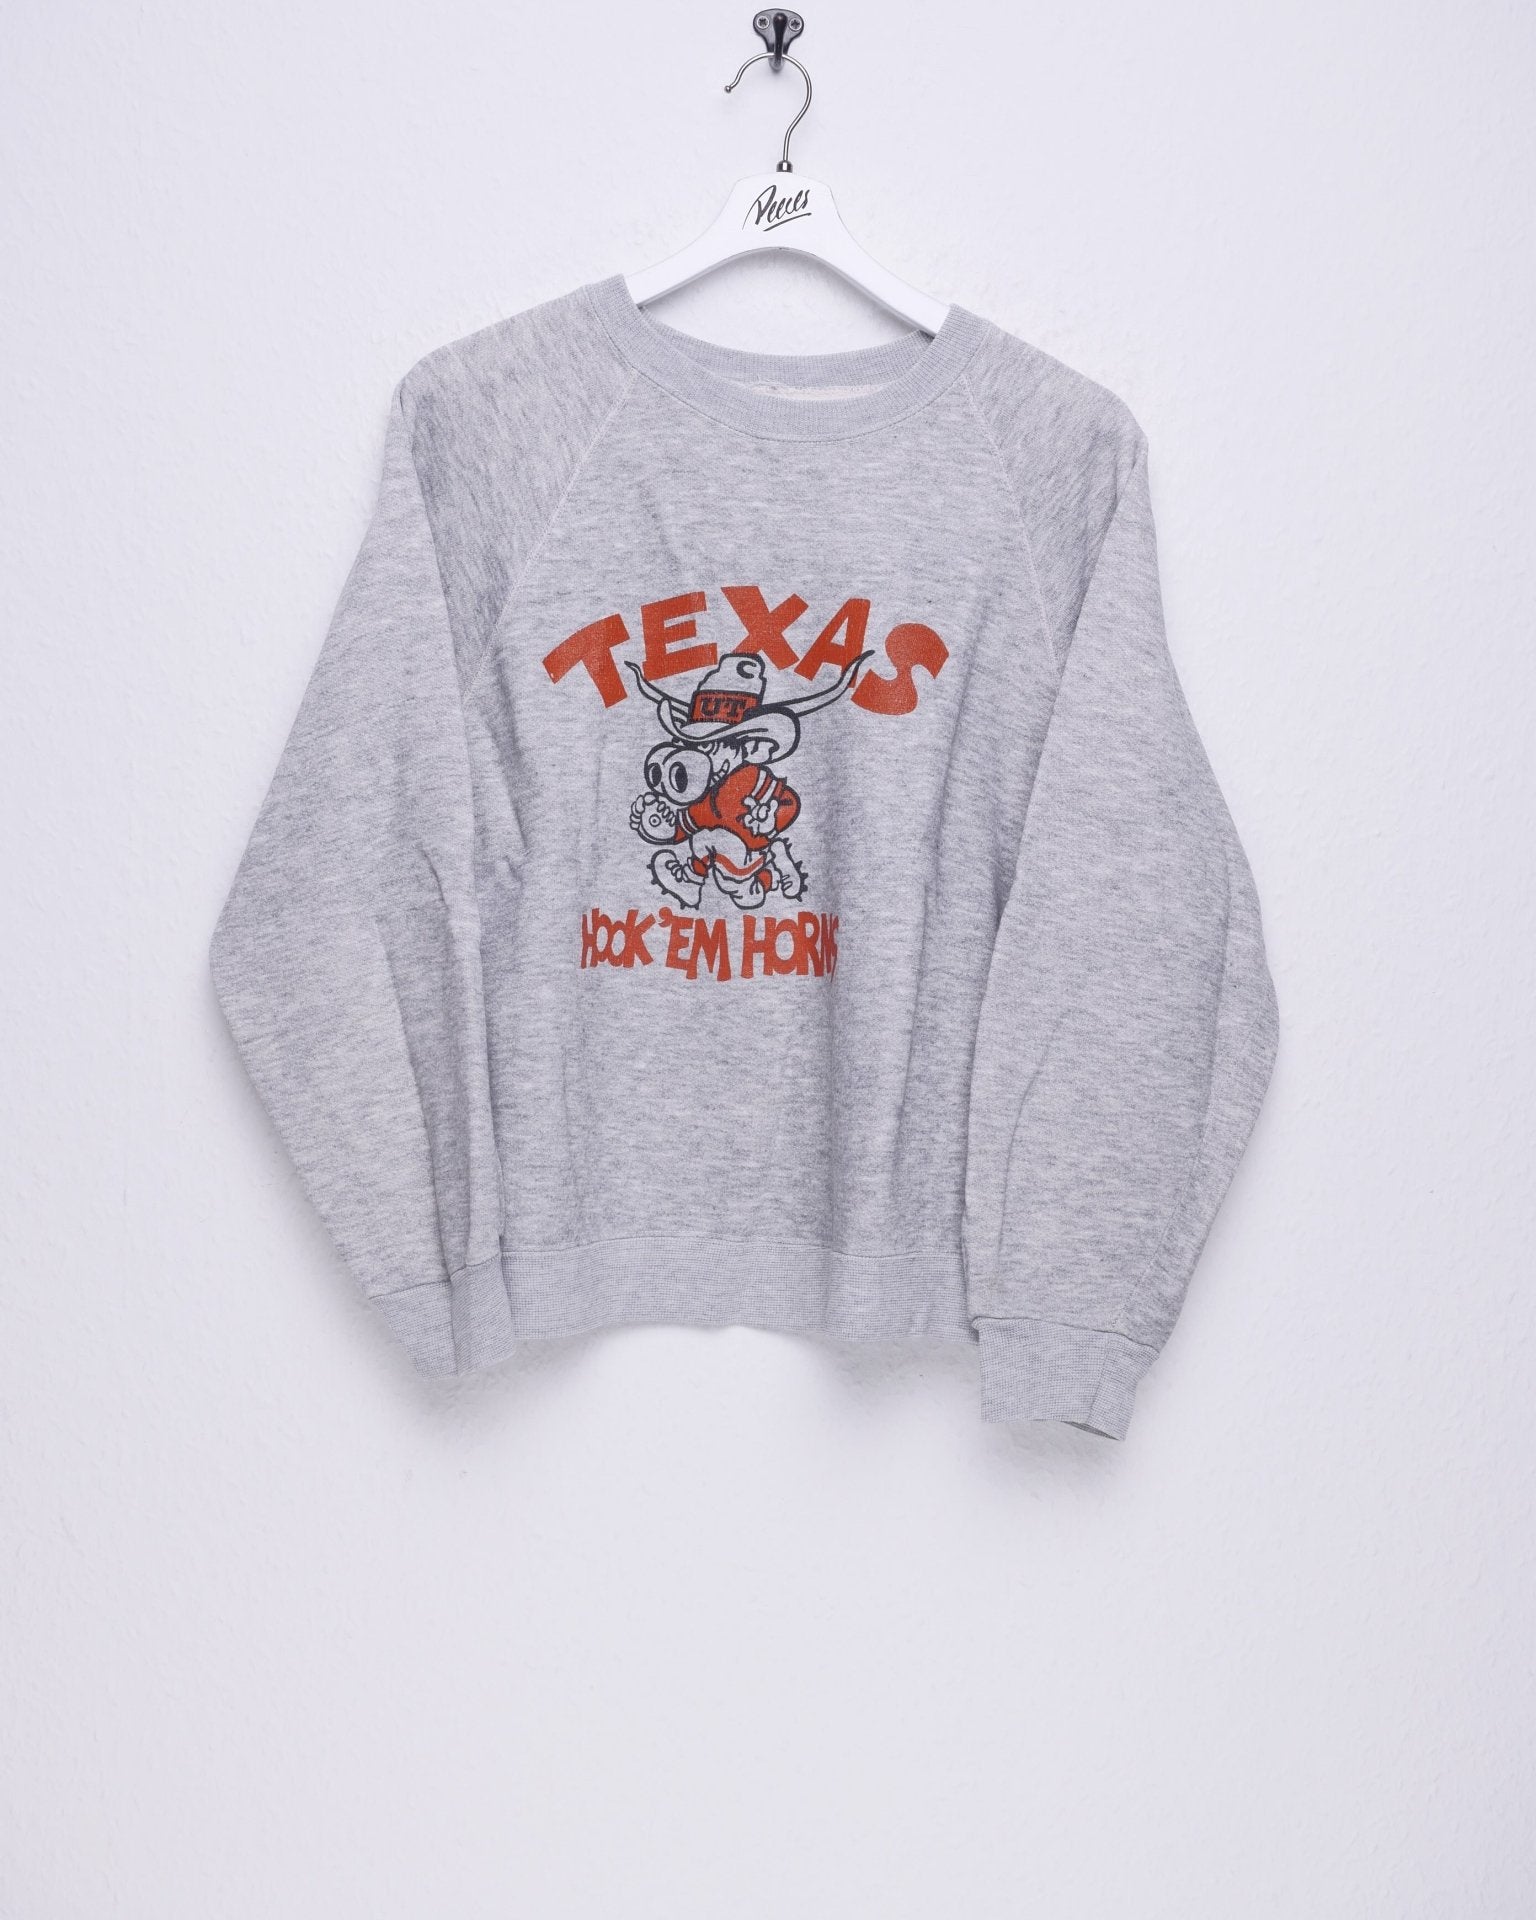 Texas 'Hook'em Horns' printed Graphic grey Sweater - Peeces